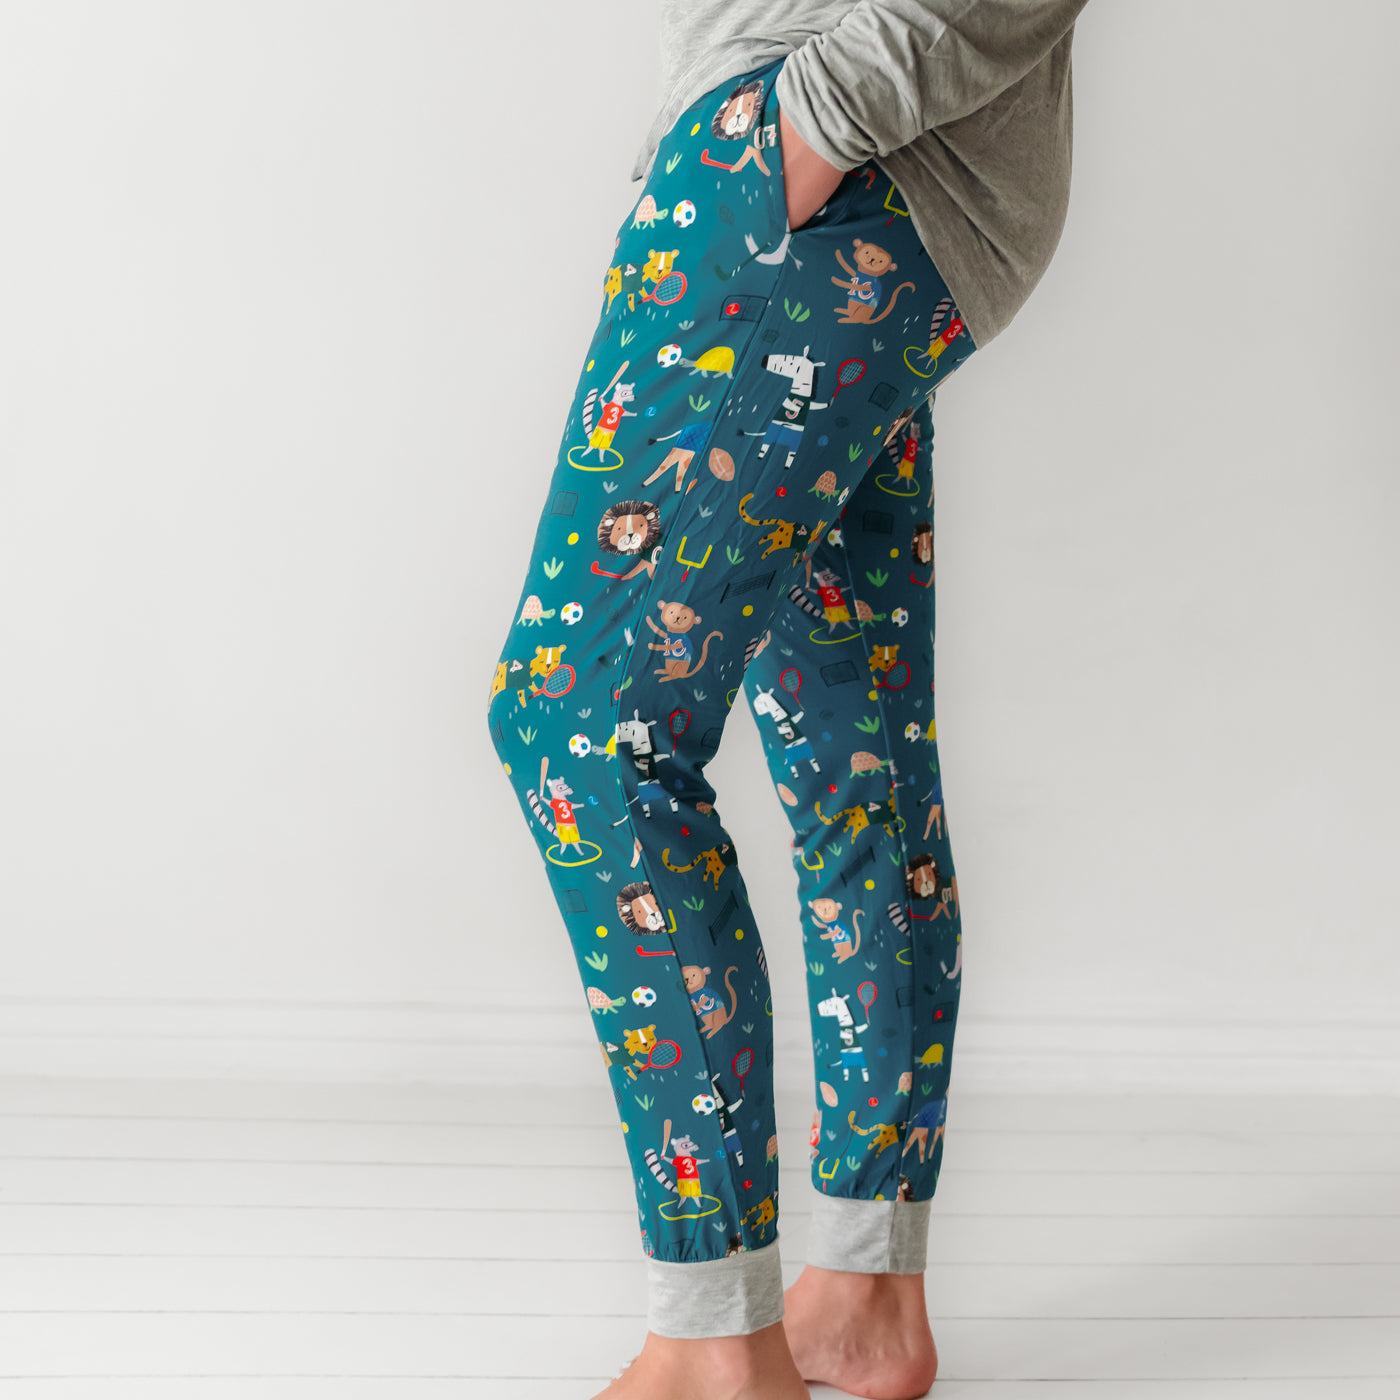 Joyspun Women's Plush Sleep Pants, Sizes up to 3X